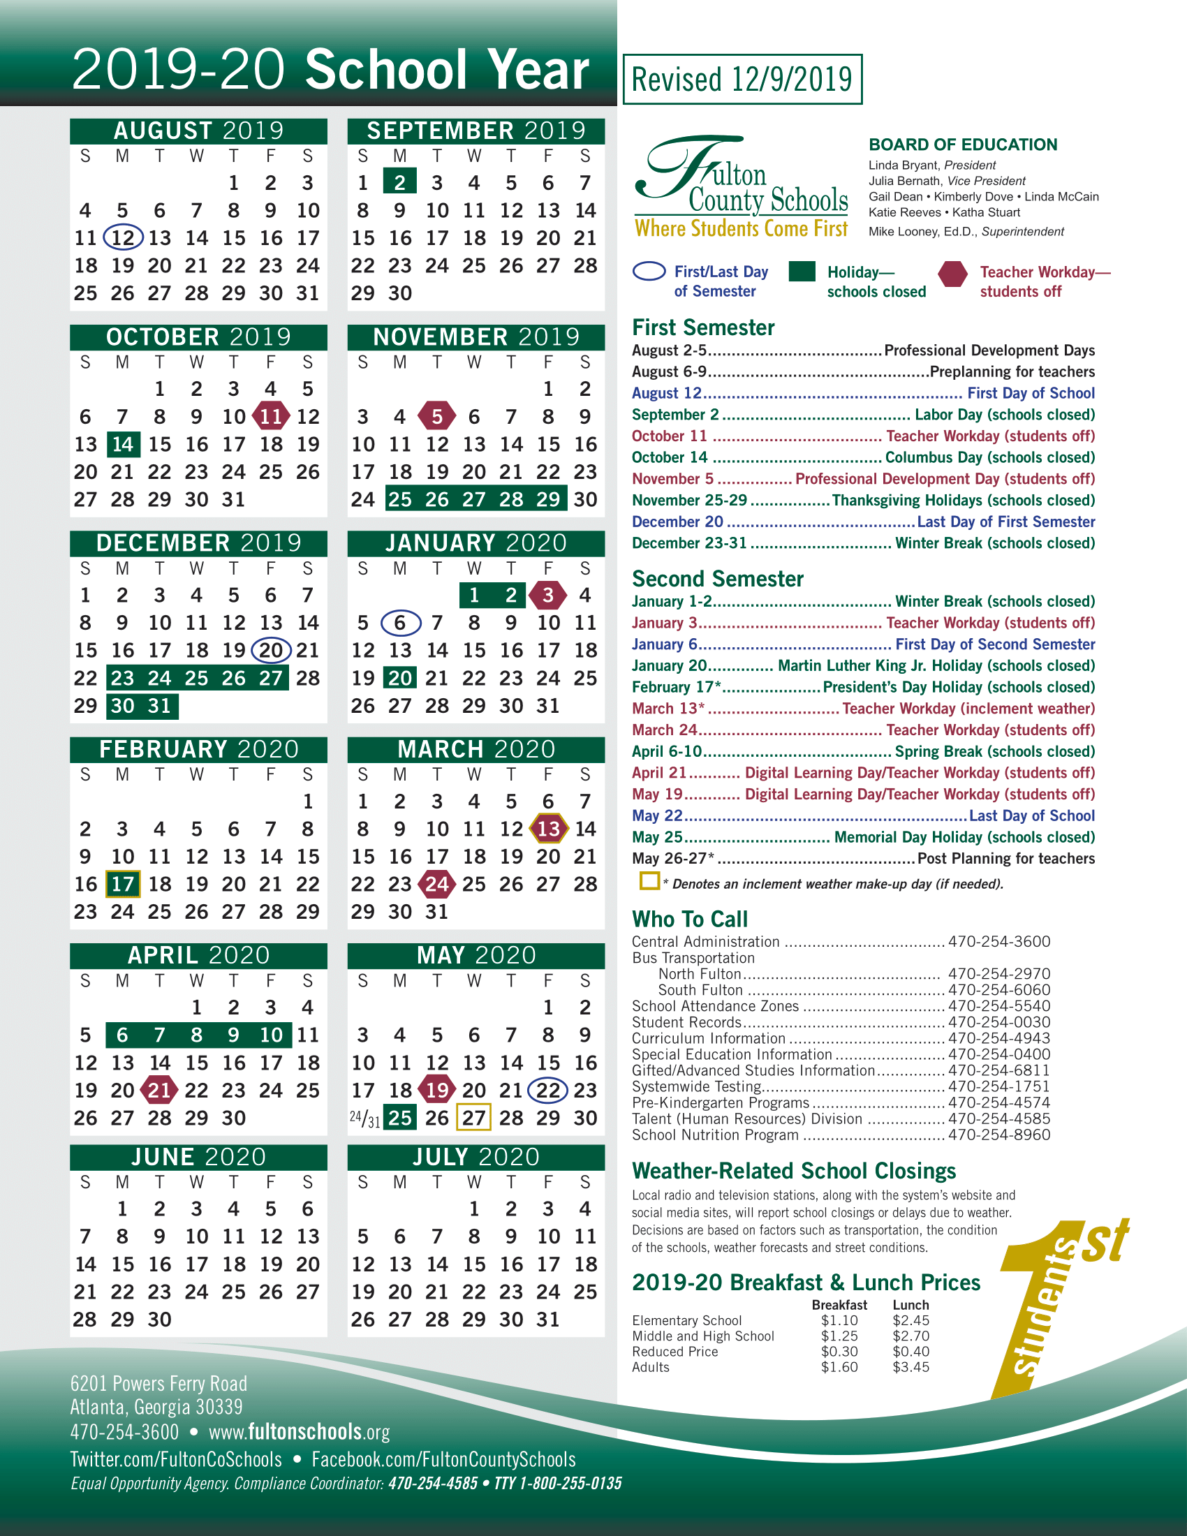 fulton-county-public-schools-calendar-county-school-calendar